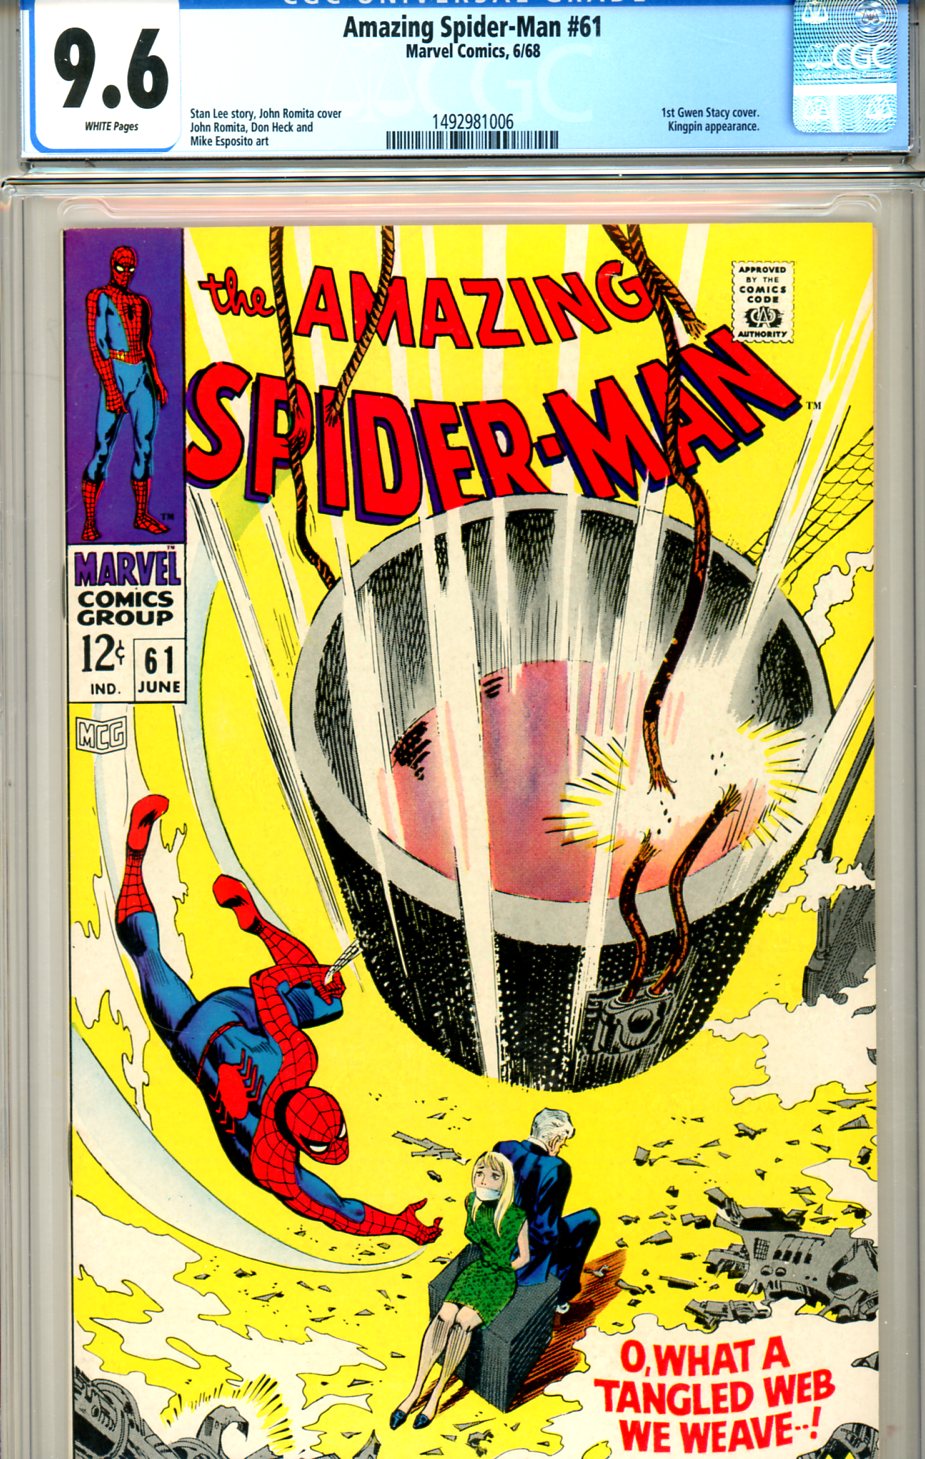 Amazing Spider-Man #61 CGC 9.6 w